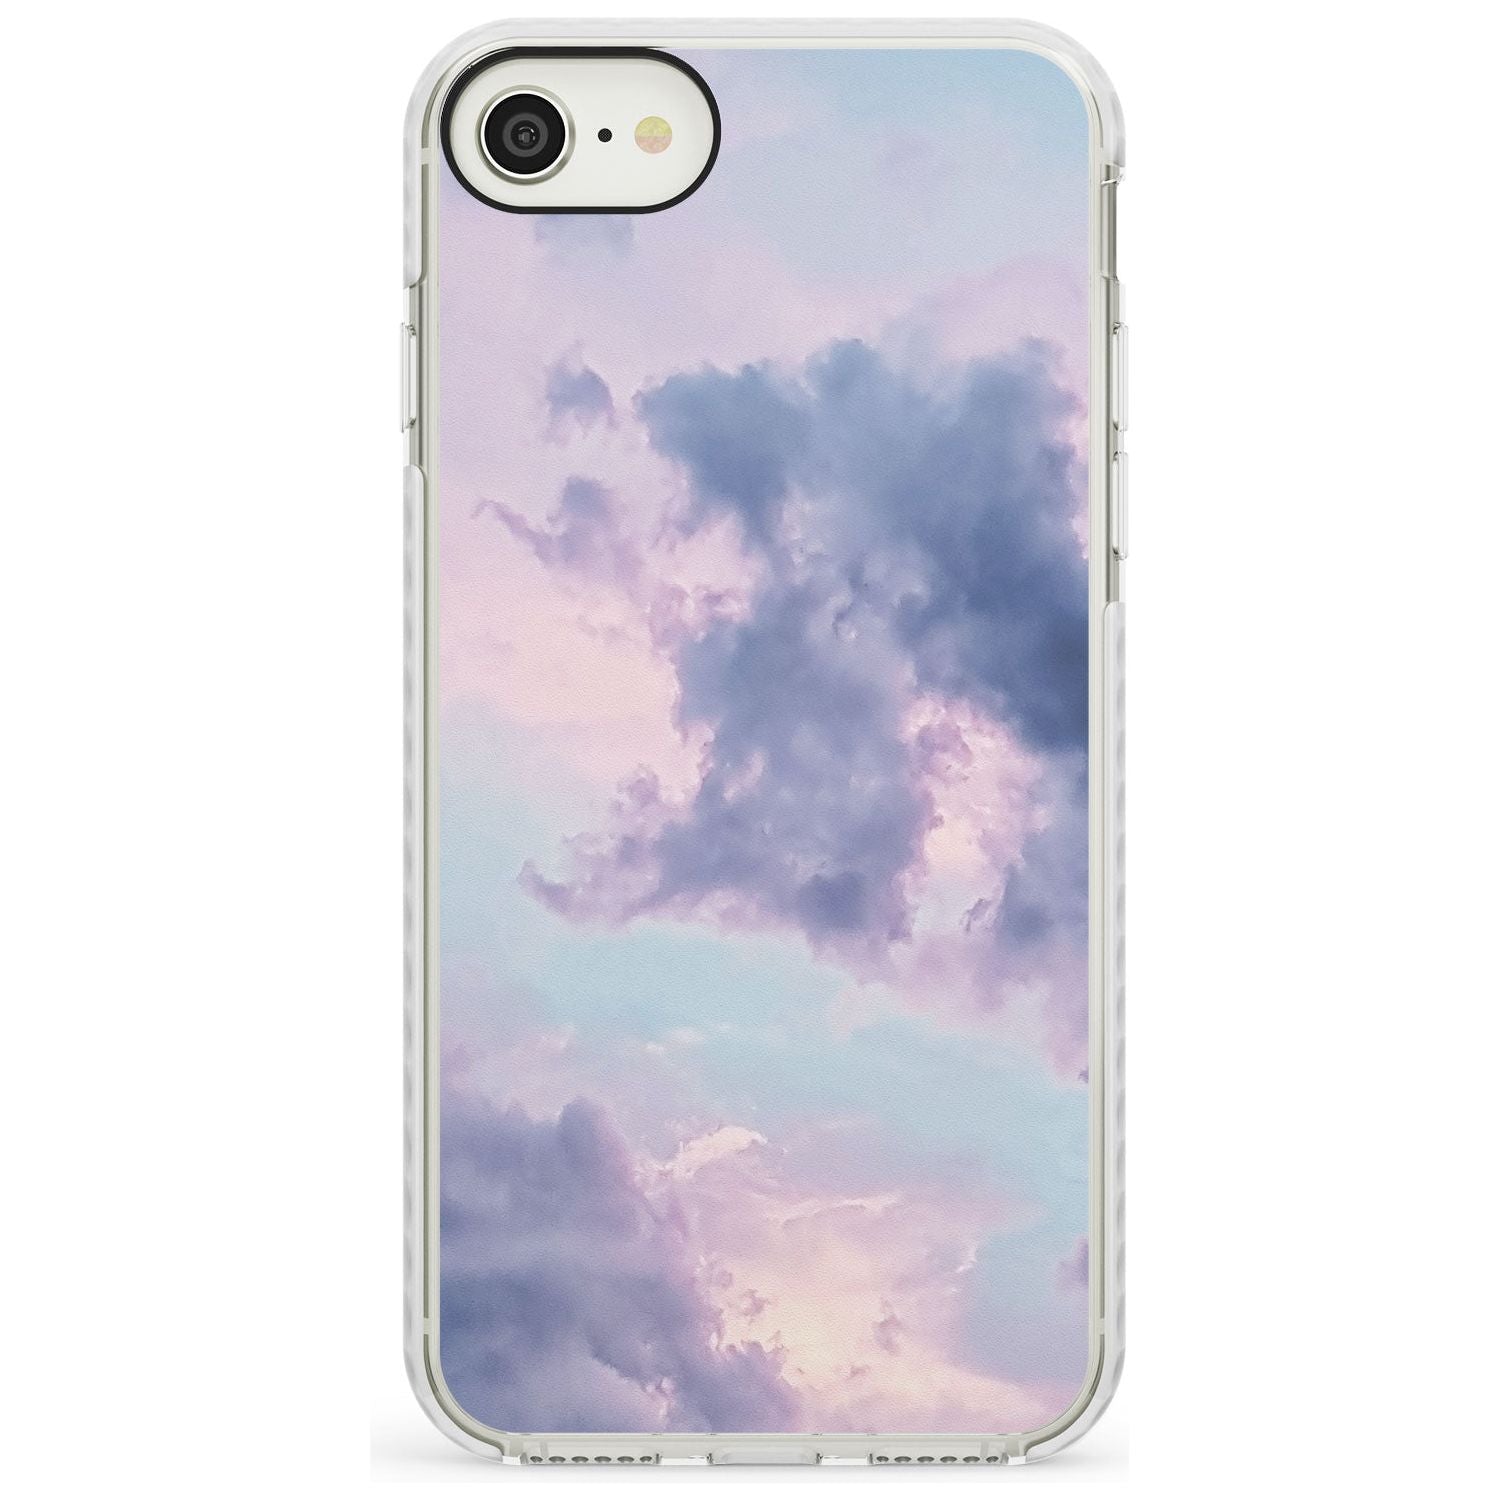 Purple Clouds Photograph Impact Phone Case for iPhone SE 8 7 Plus